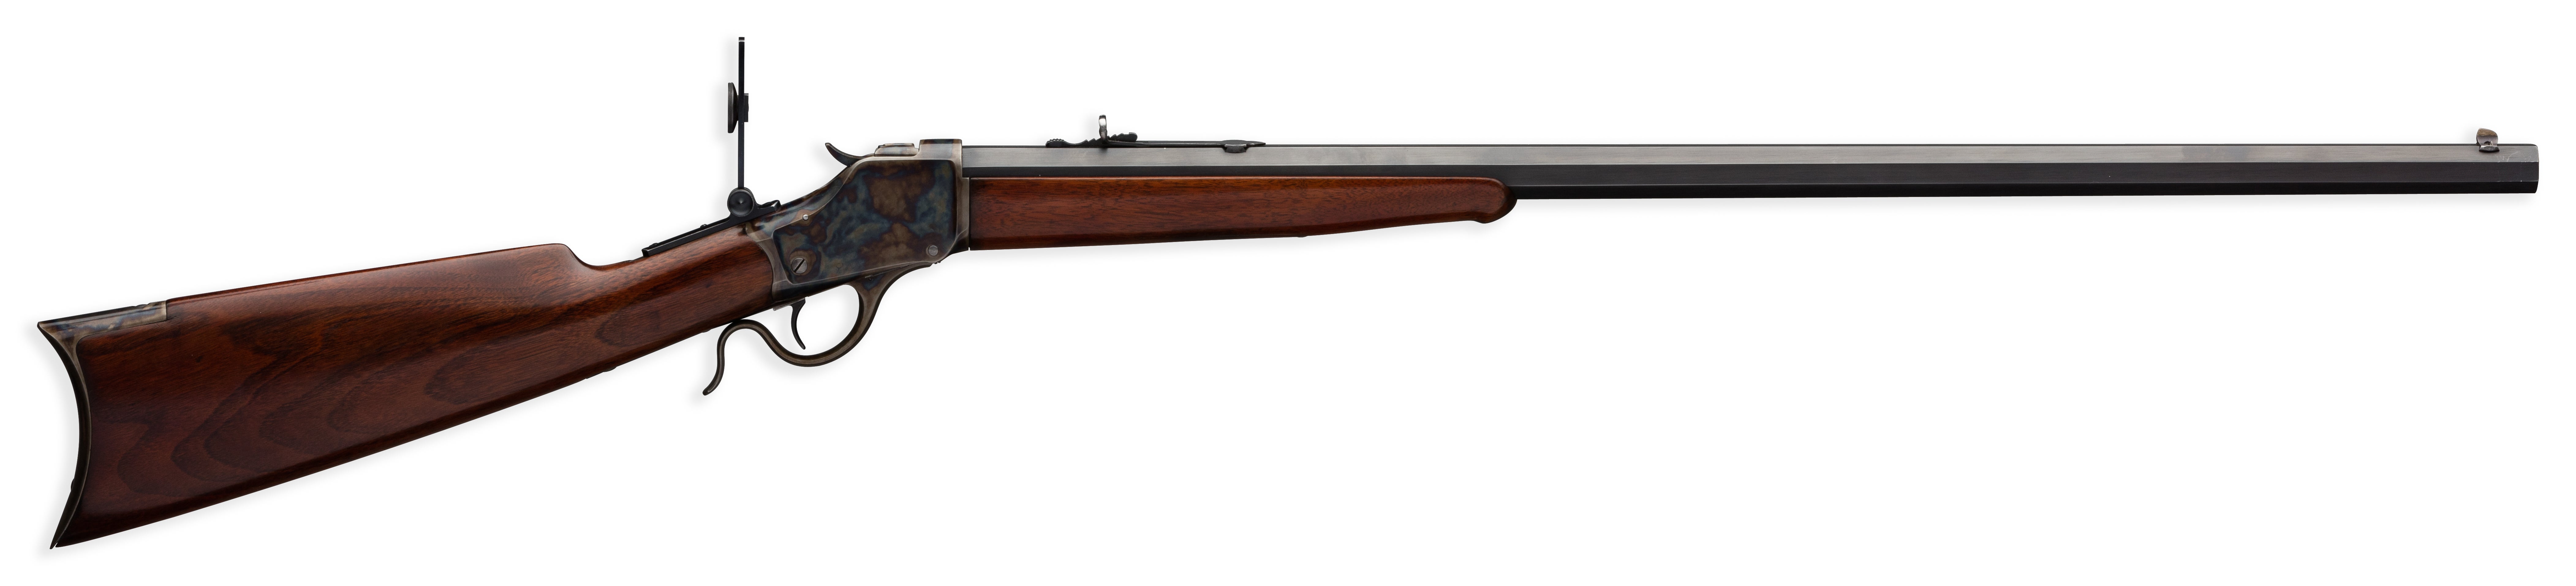 Historic Model 1885 Rifle